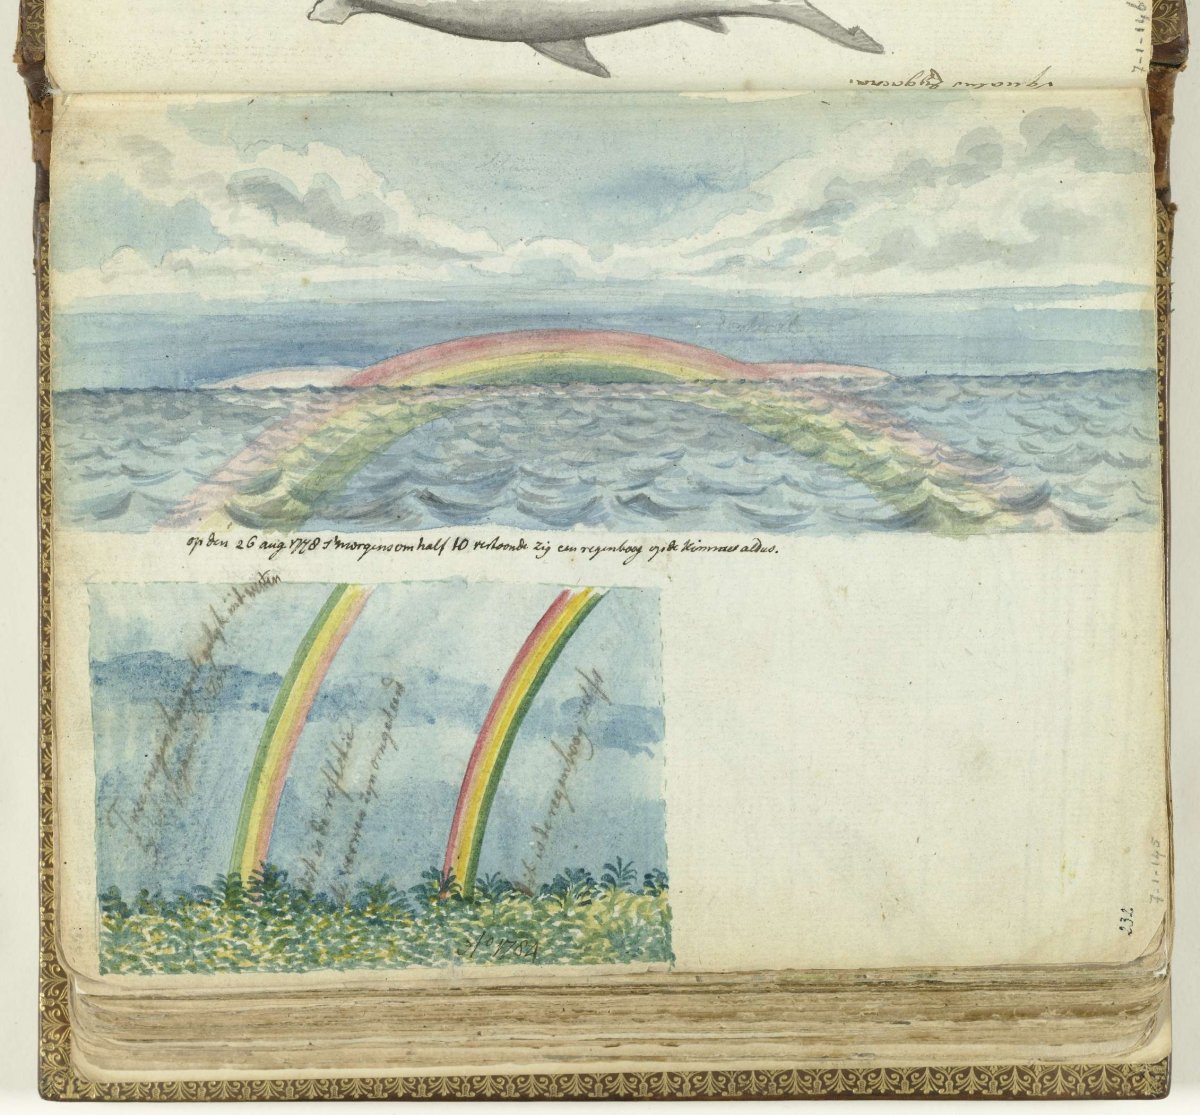 Rainbows at sea and on land, Jan Brandes, 1778 - 1784